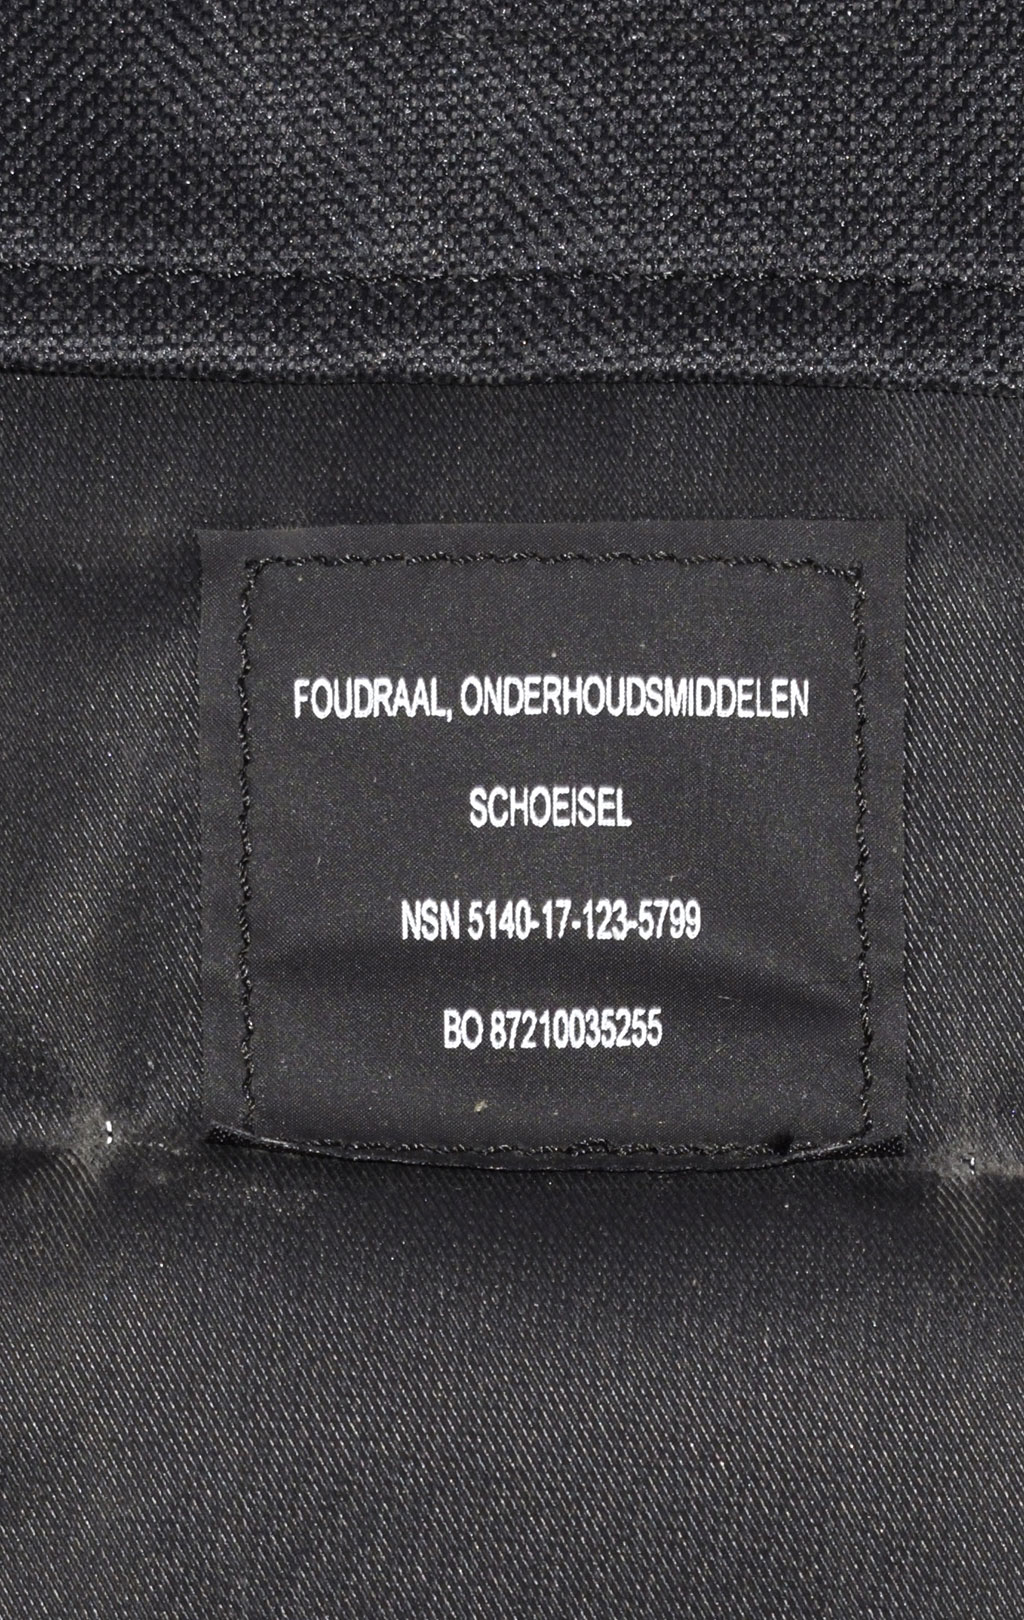 Чехол под набор для чистки обуви black б/у Голландия